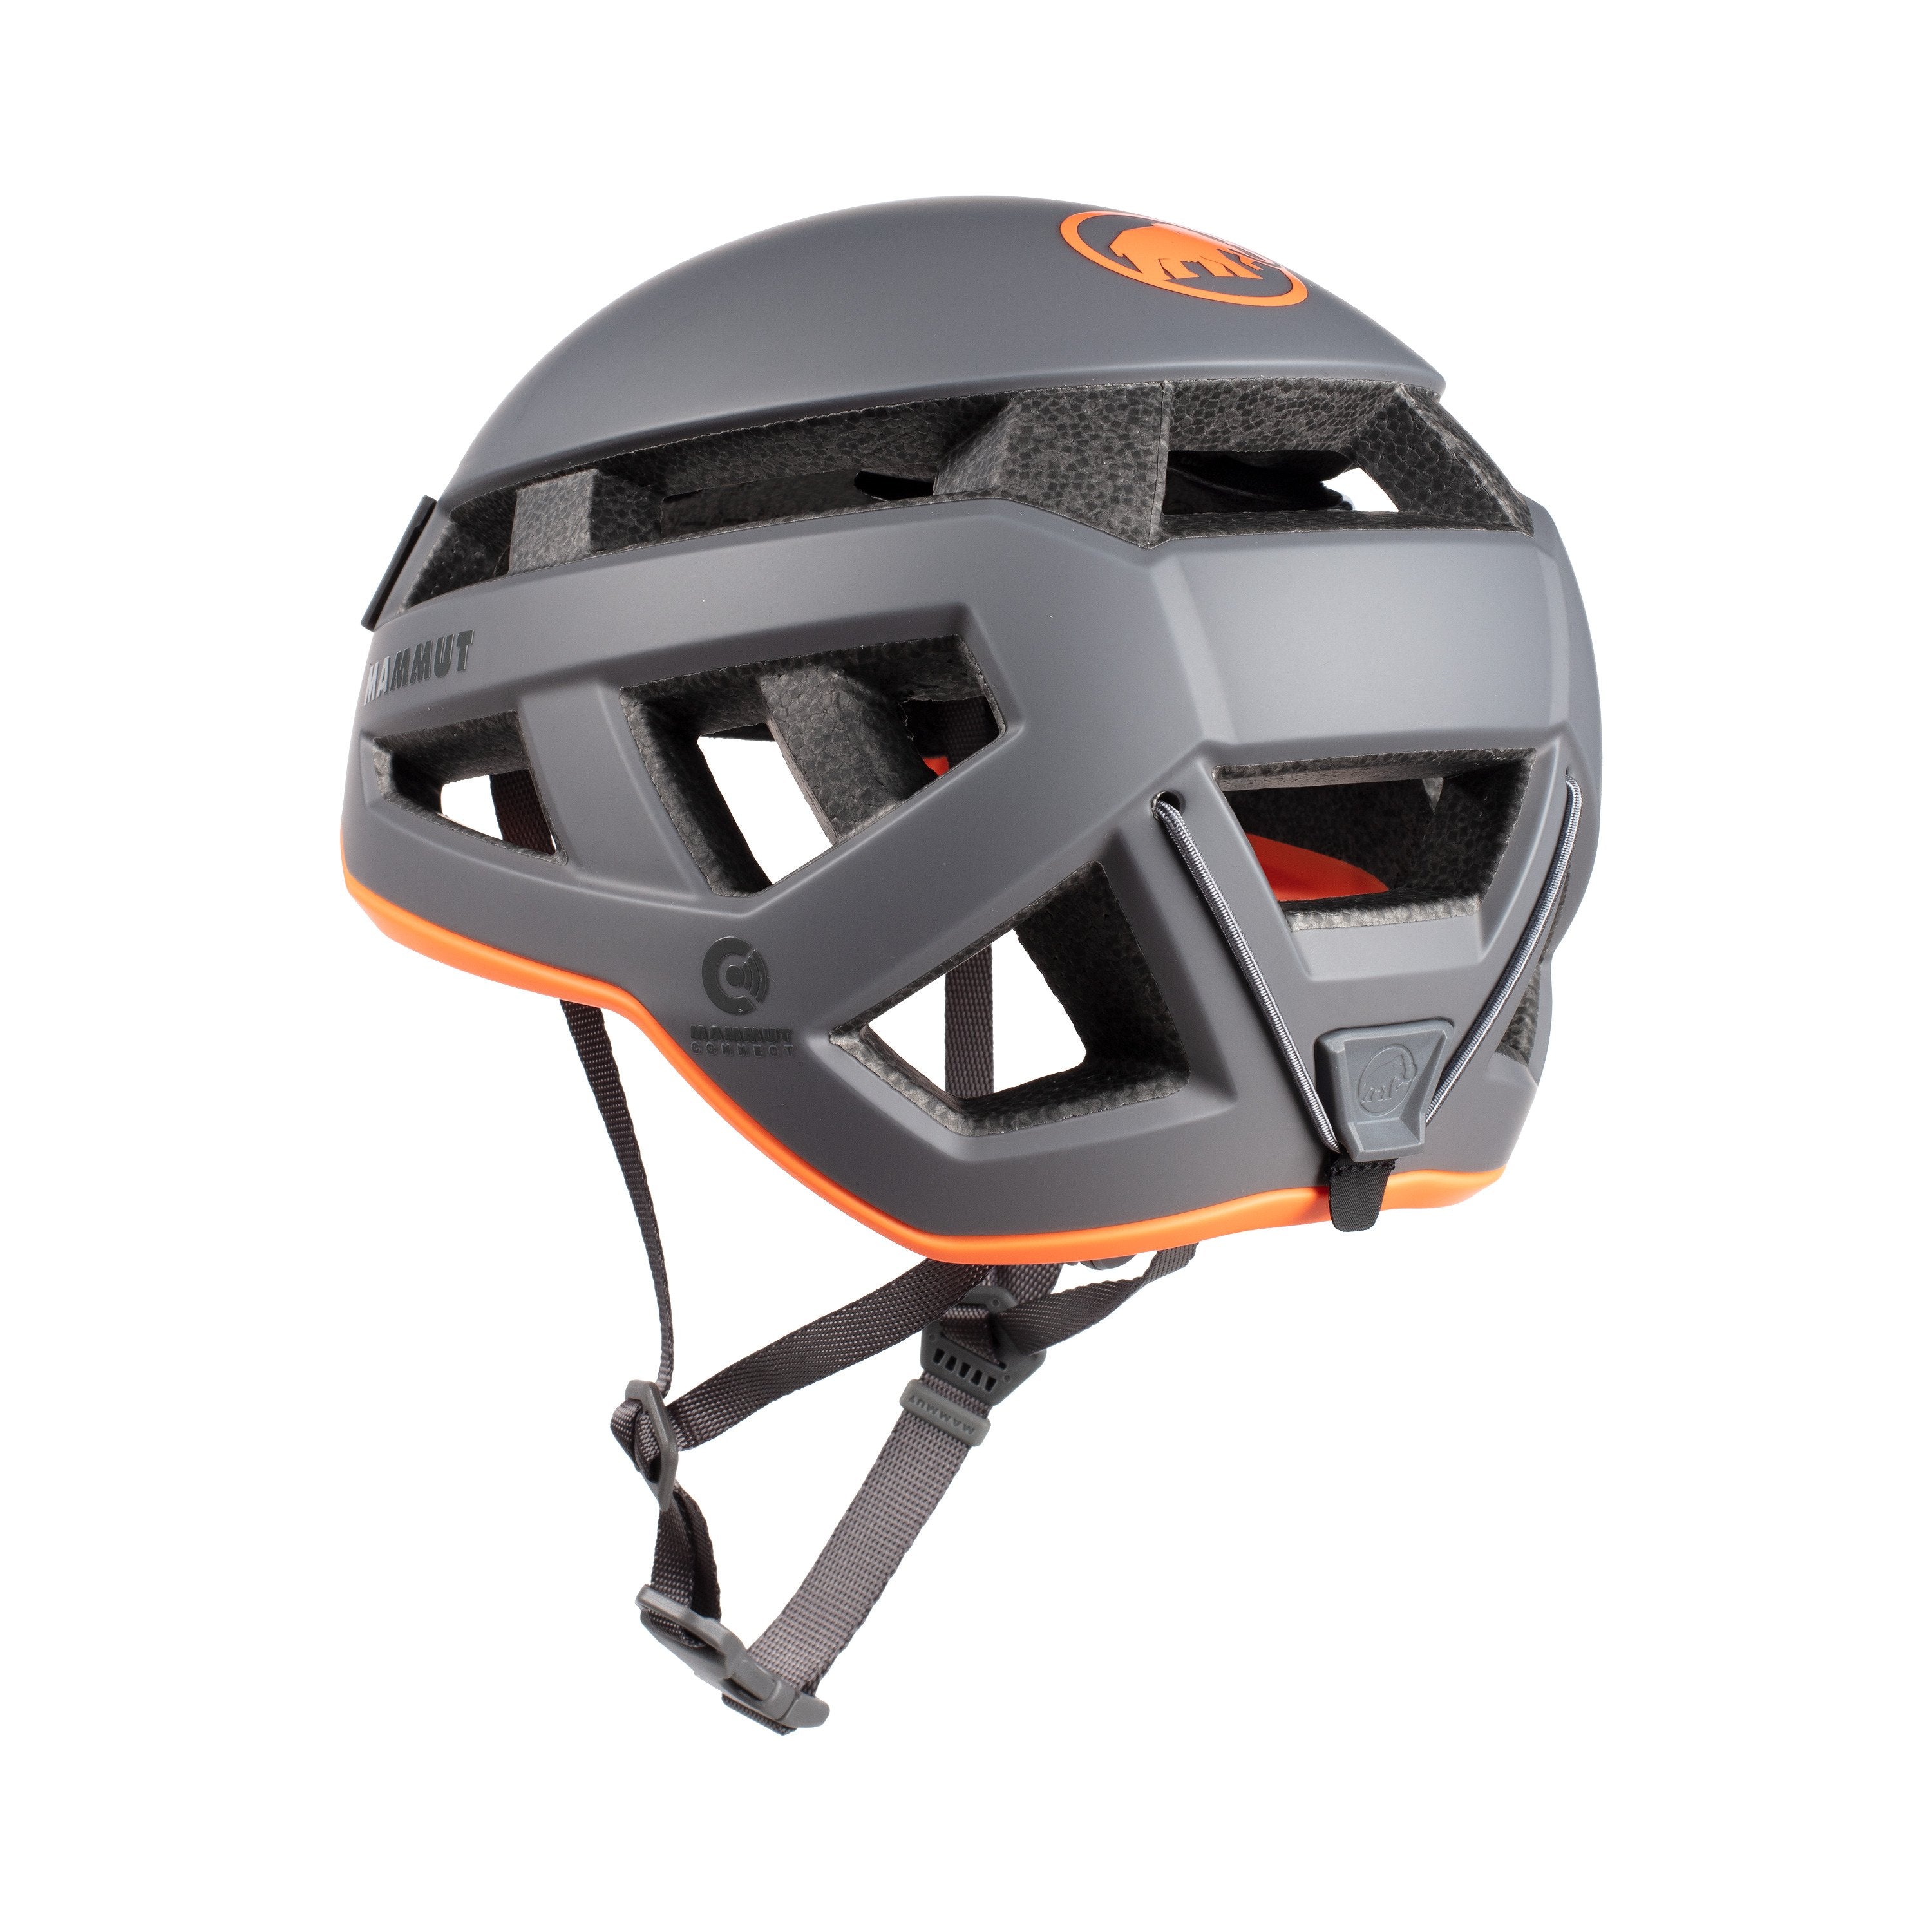 Mammut Crag Sender Helmet - Ascent Outdoors LLC